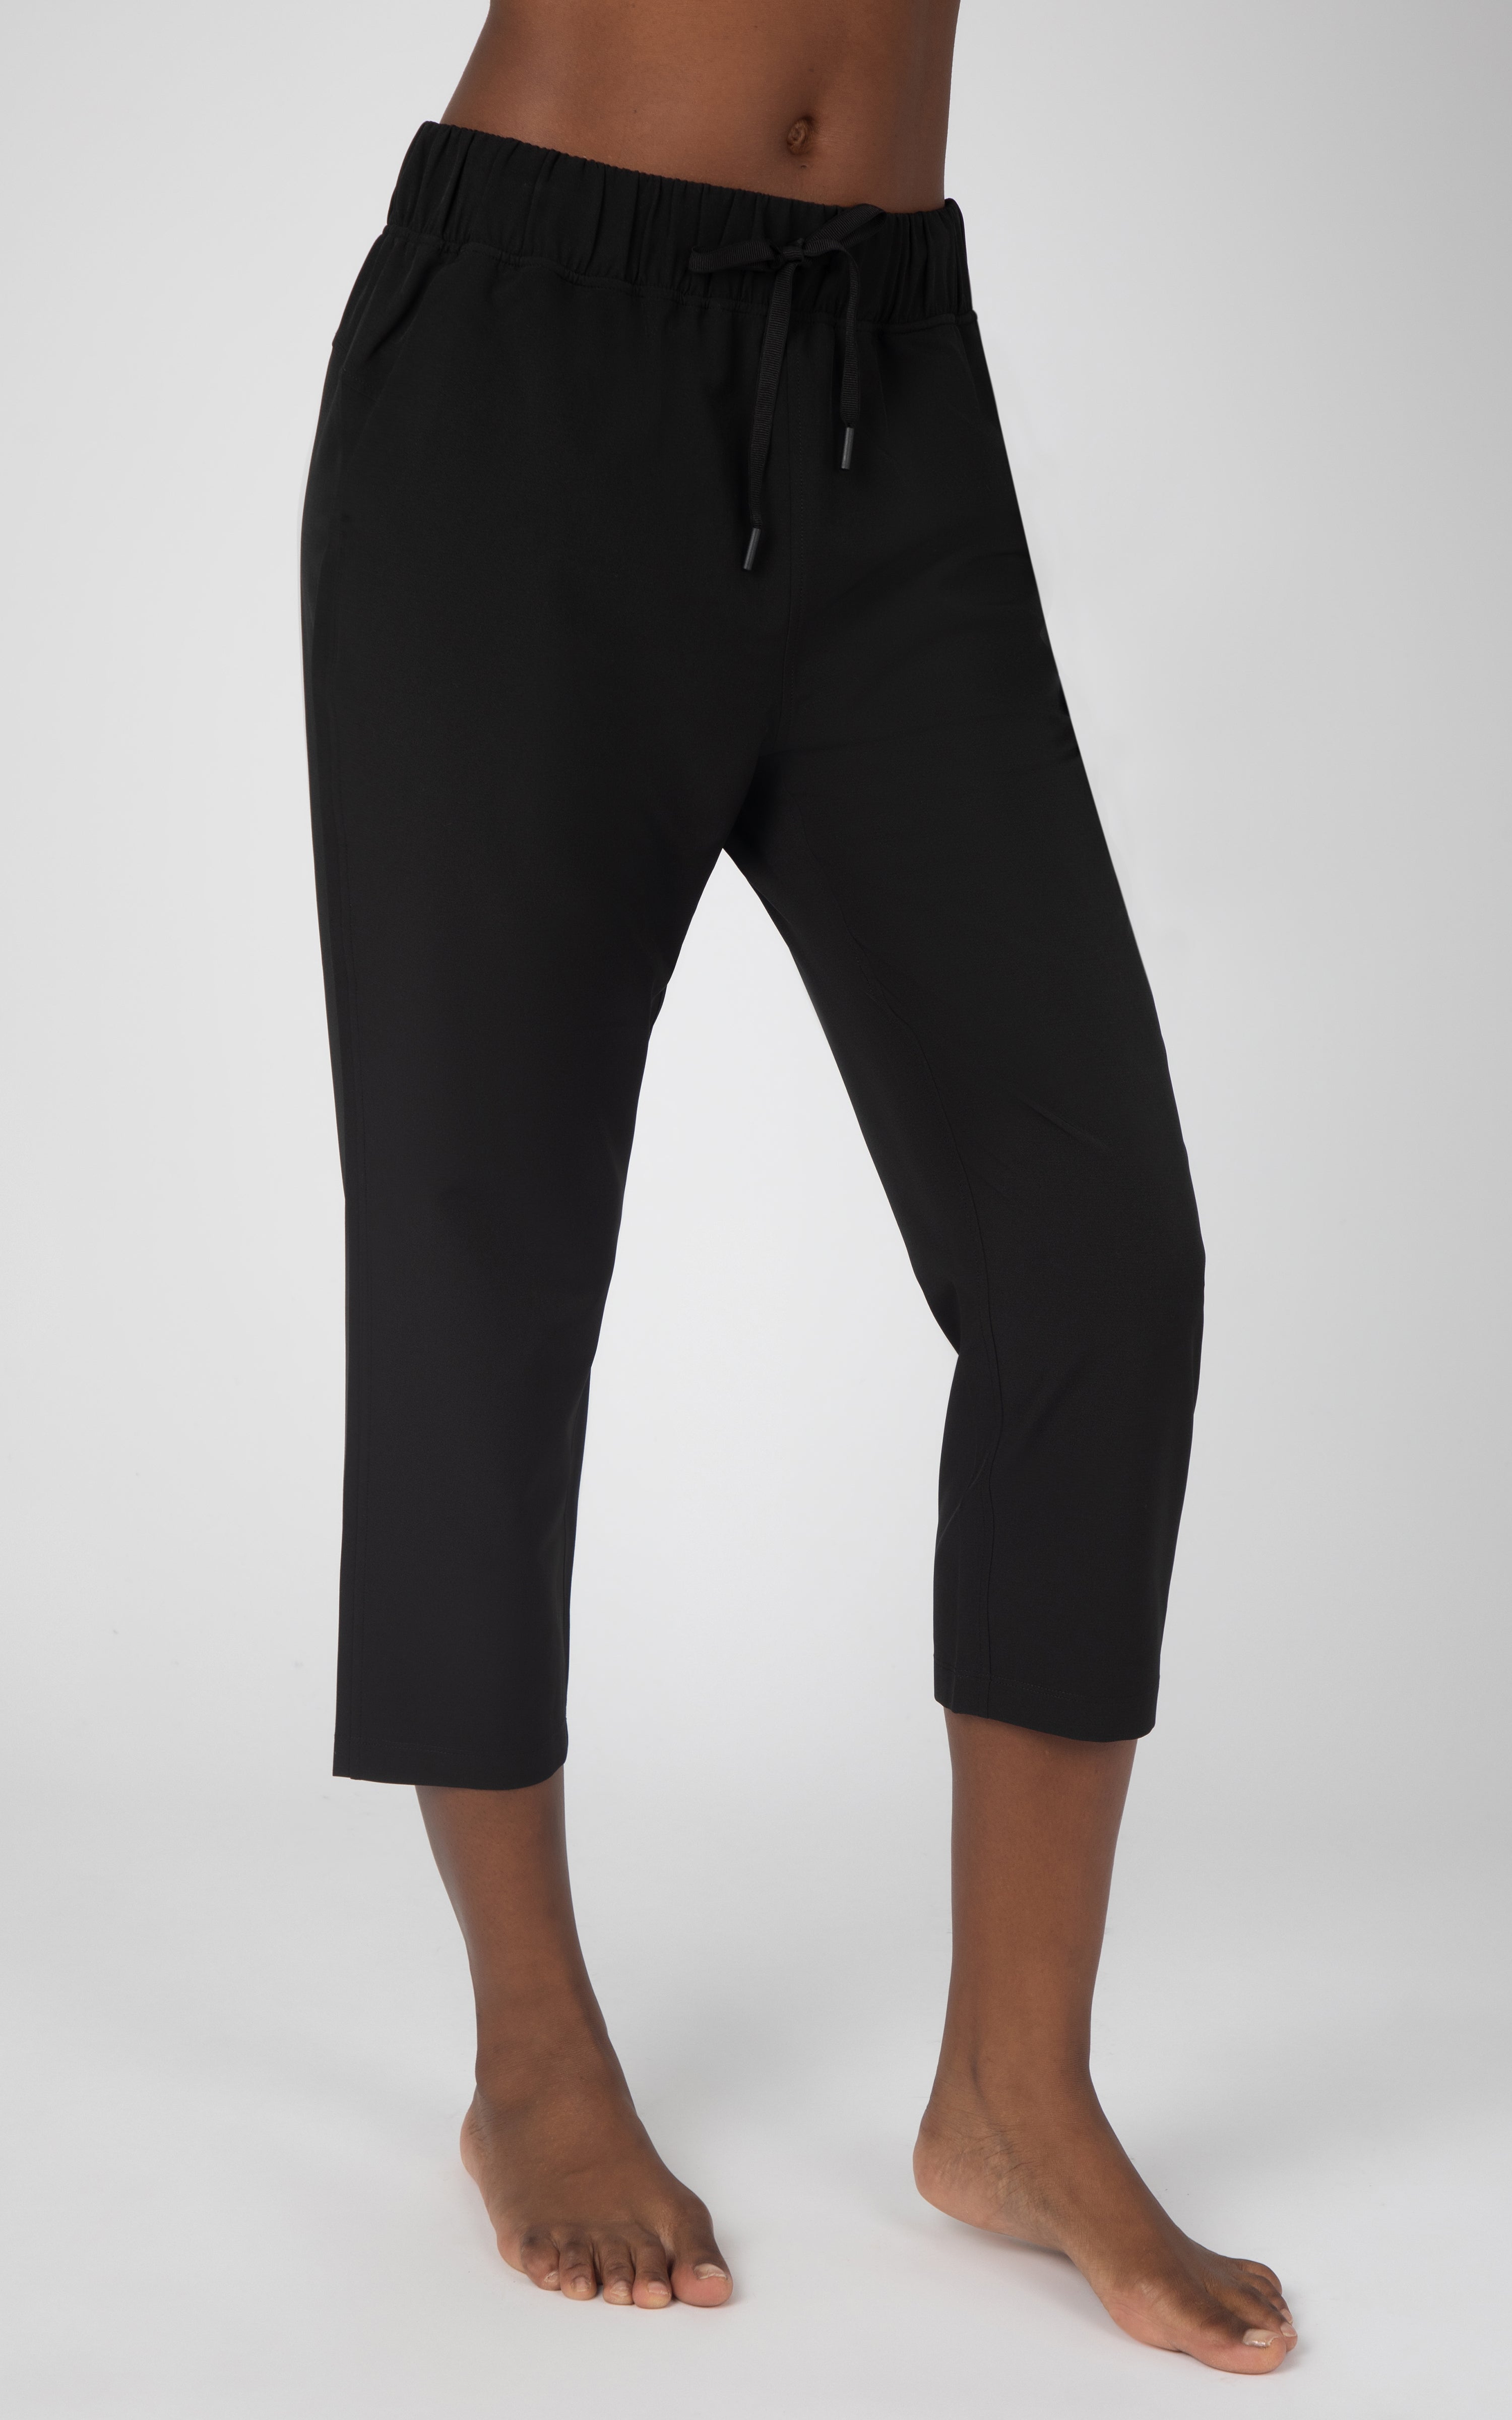 NIKE Womens Capri Tracksuit Trousers UK 12 Medium Black Cotton Sports, Vintage & Second-Hand Clothing Online